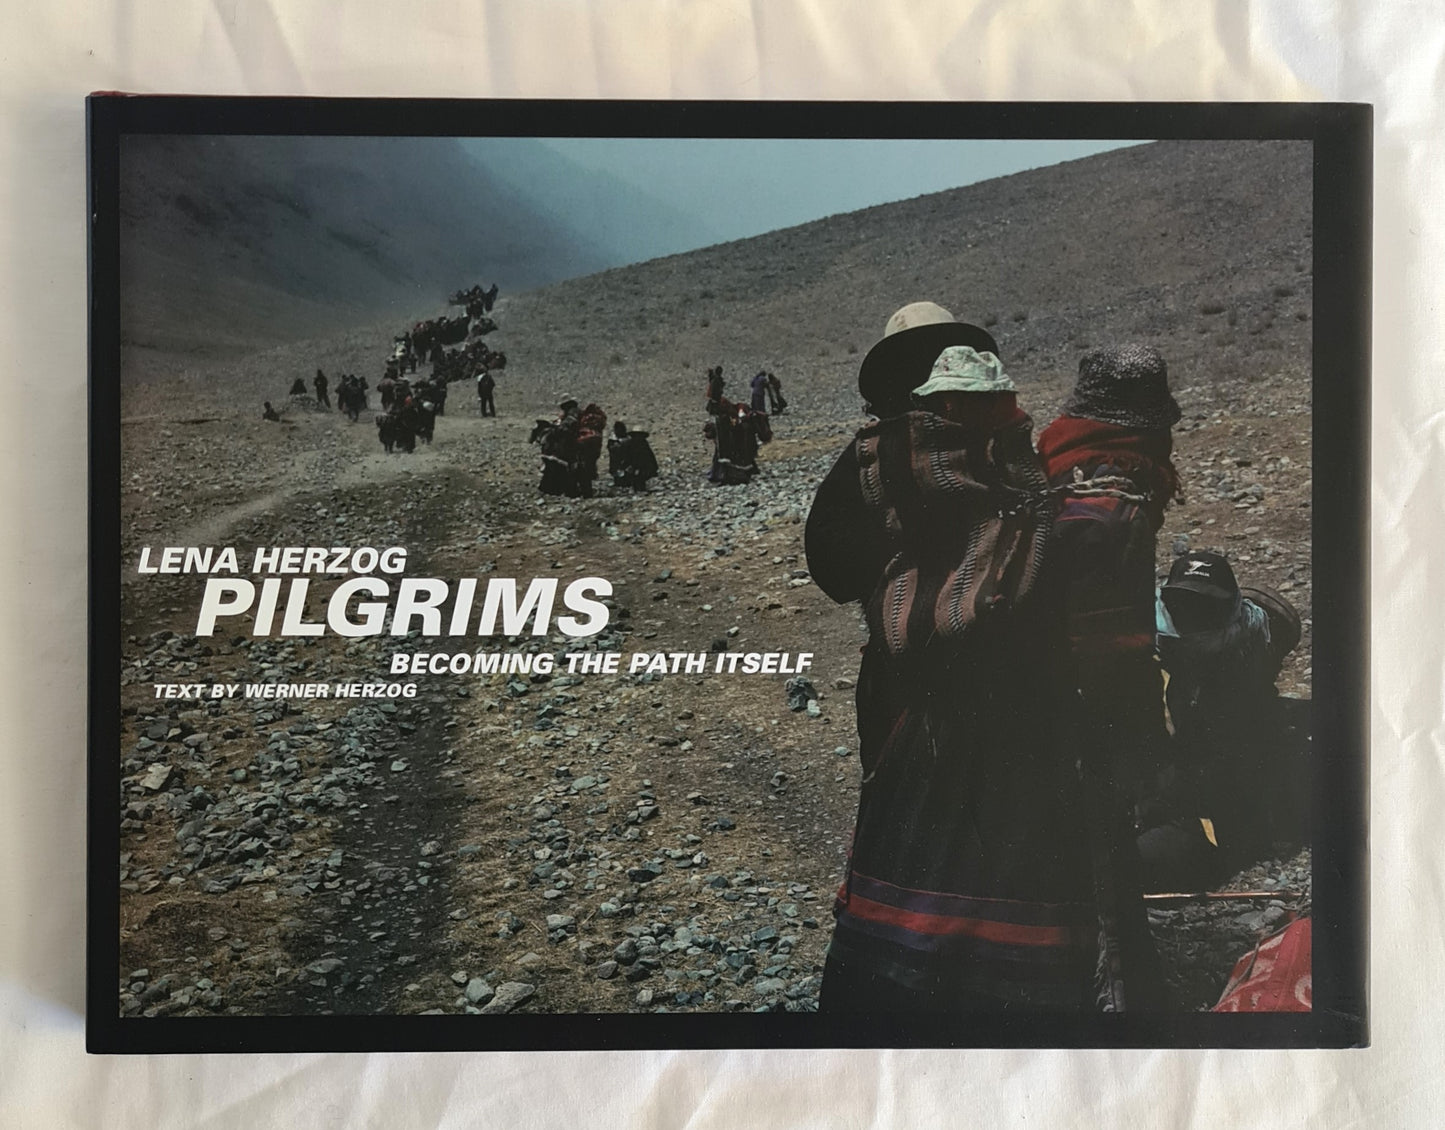 Lena Herzog Pilgrims  Becoming The Path Itself  by Werner Herzog